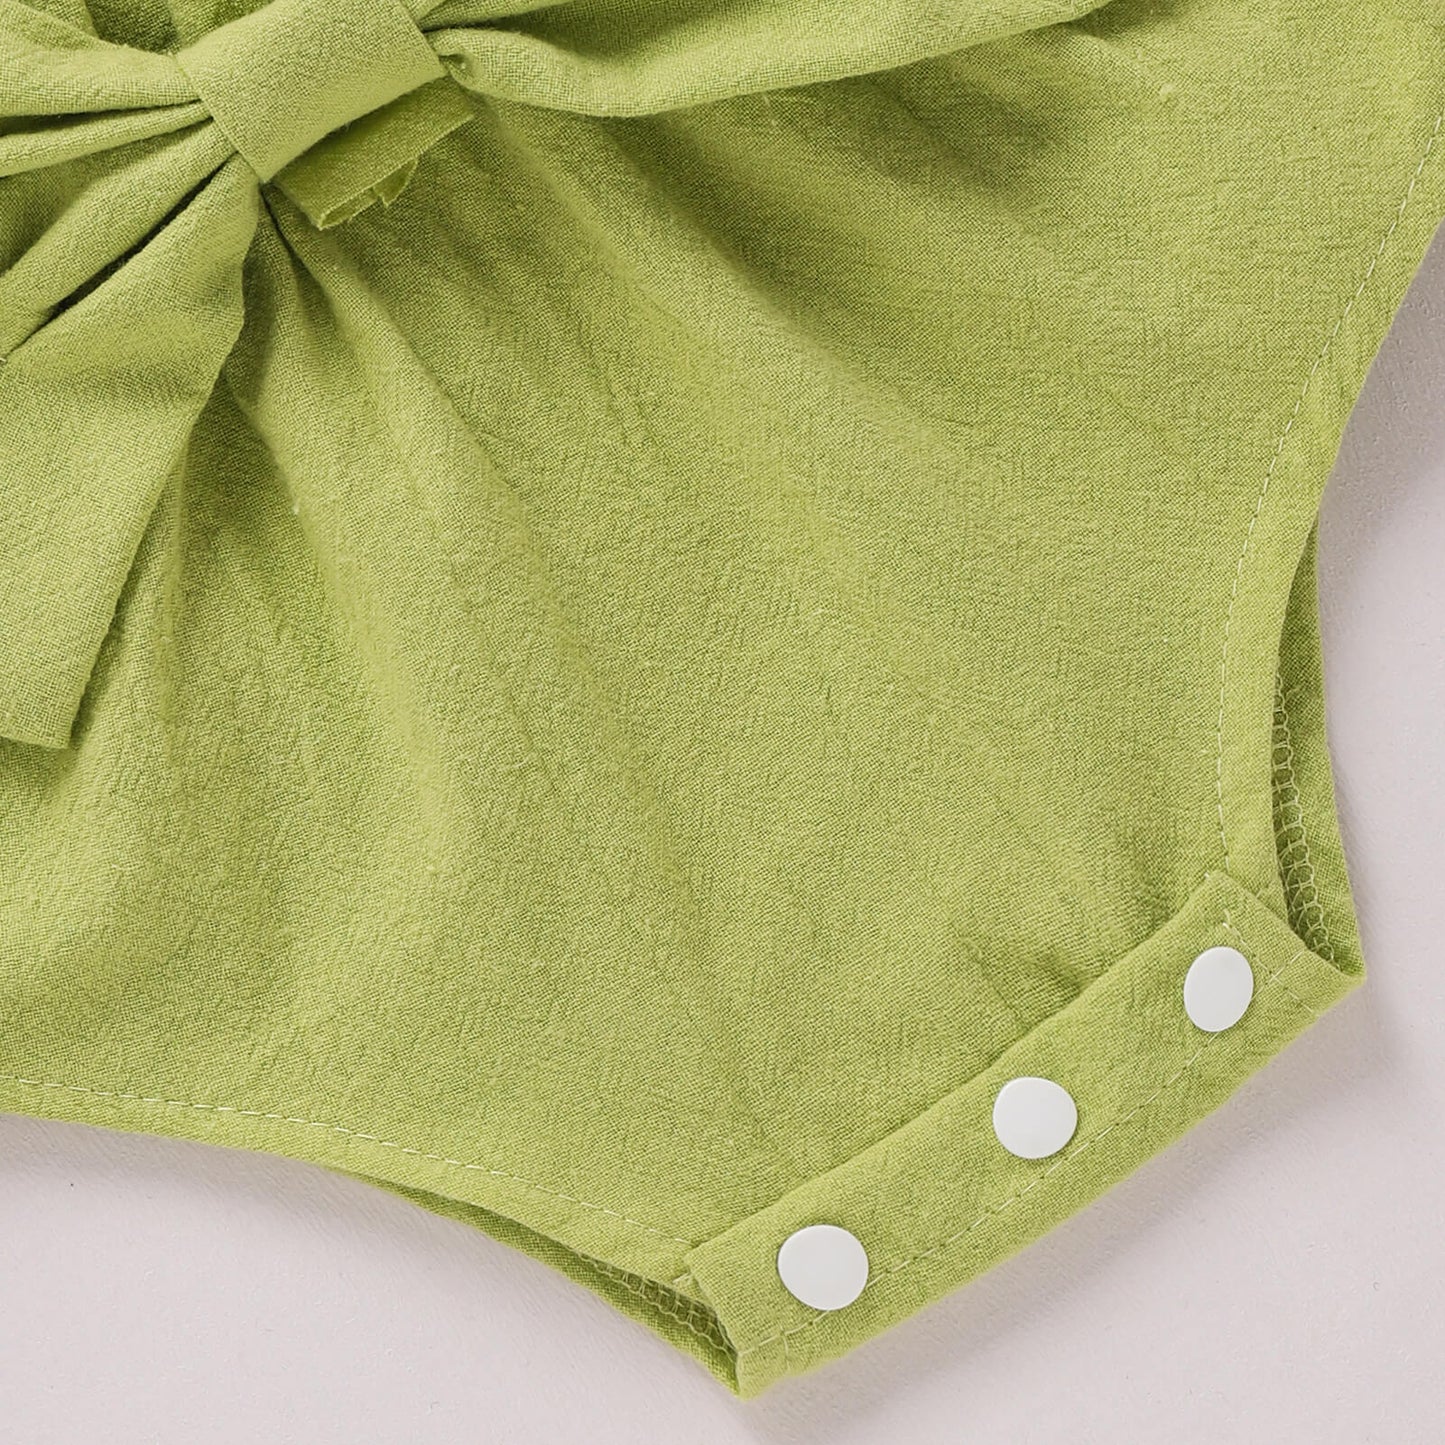 Infant/Baby Bow Detail Flounce Sleeve Bodysuit